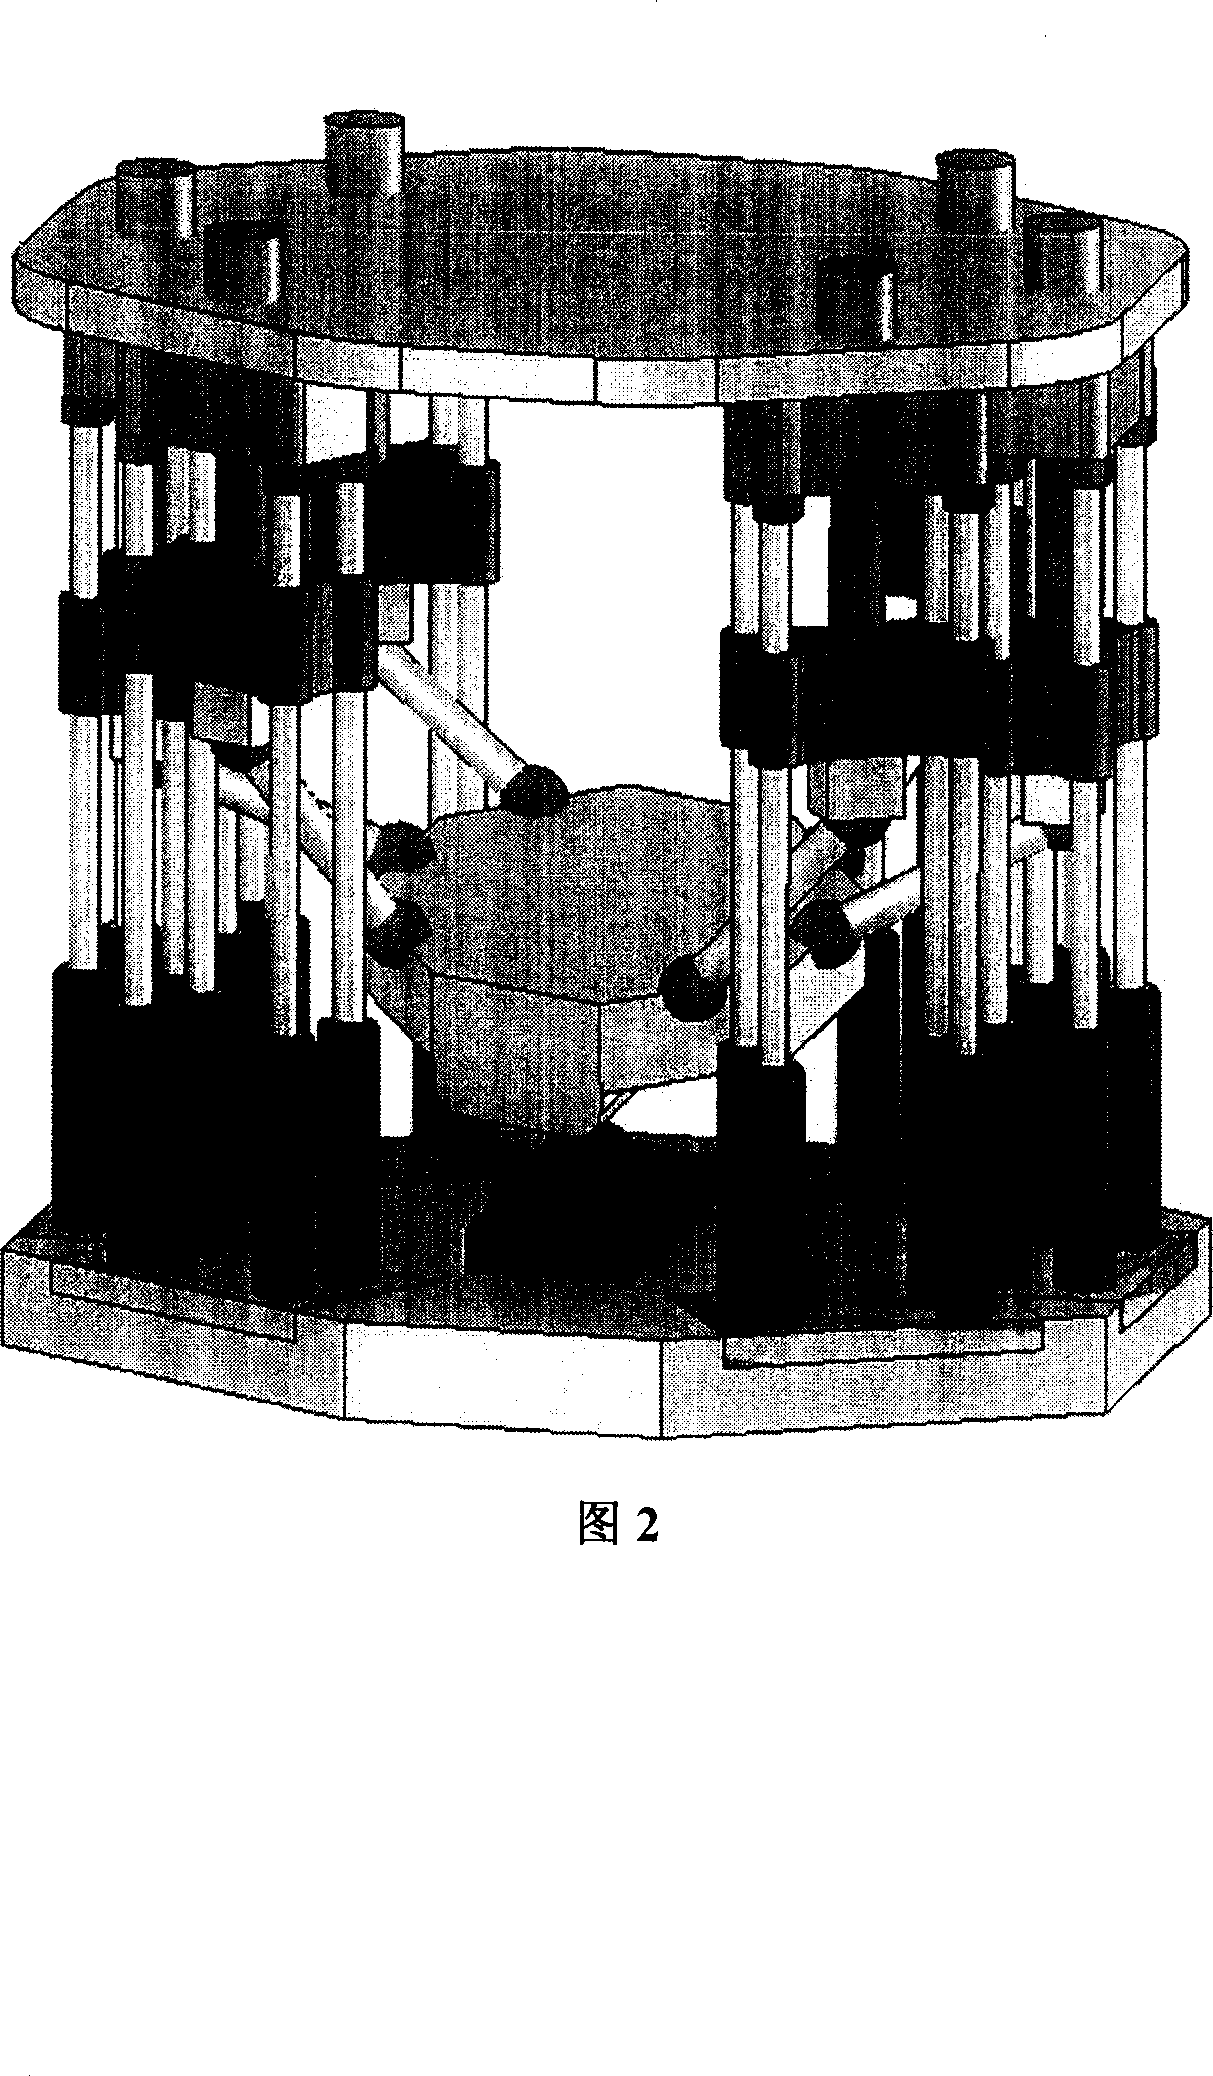 Six-dimensional parallel forging press